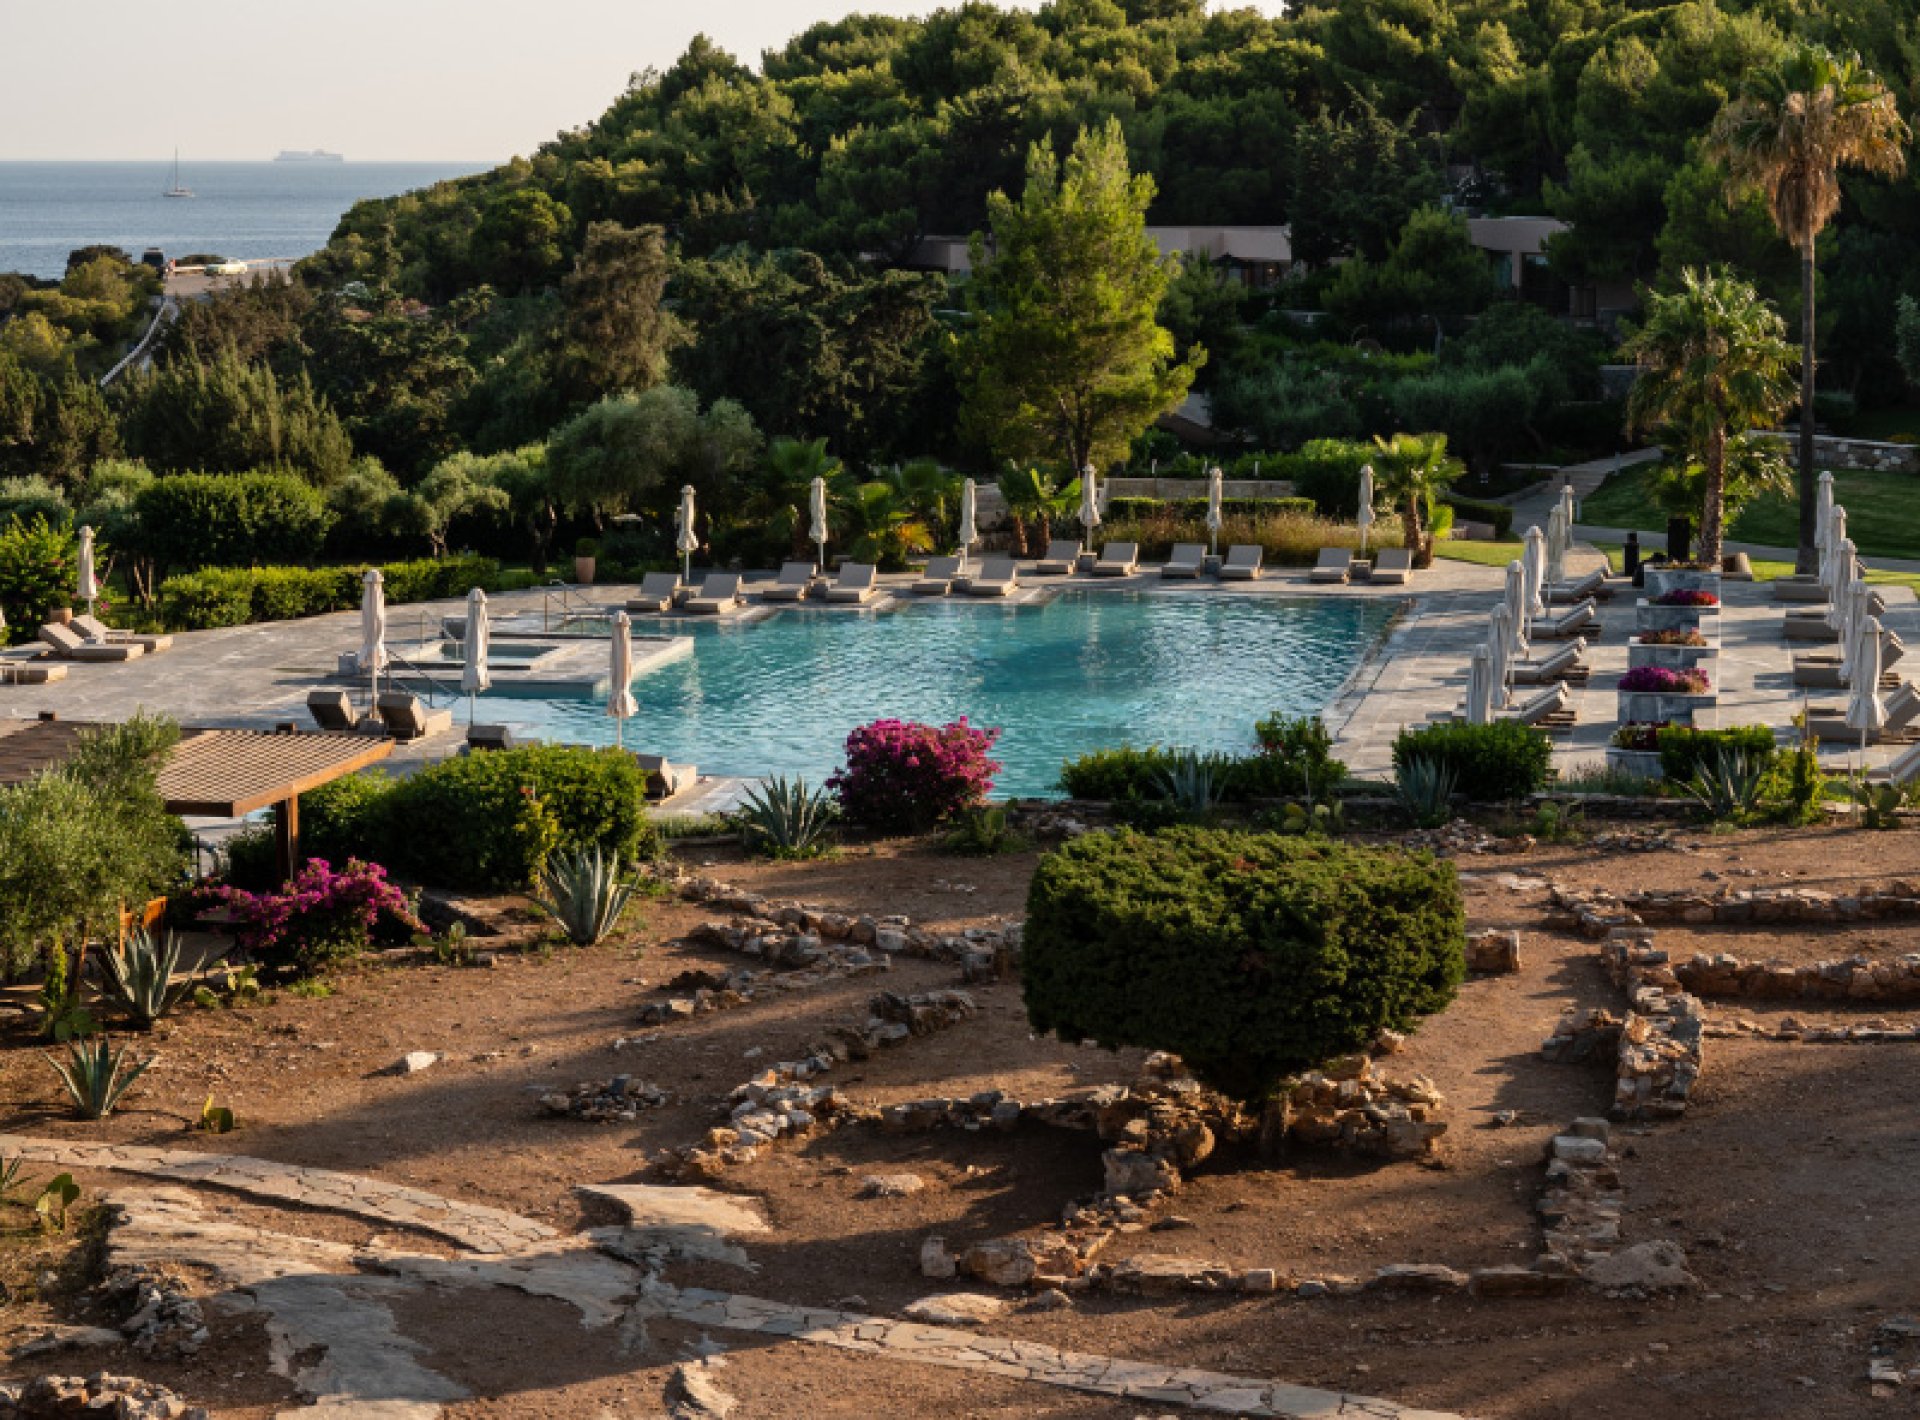 ISholidays Atenas Cape Sounio 1 Bedroom Villa with Private Pool